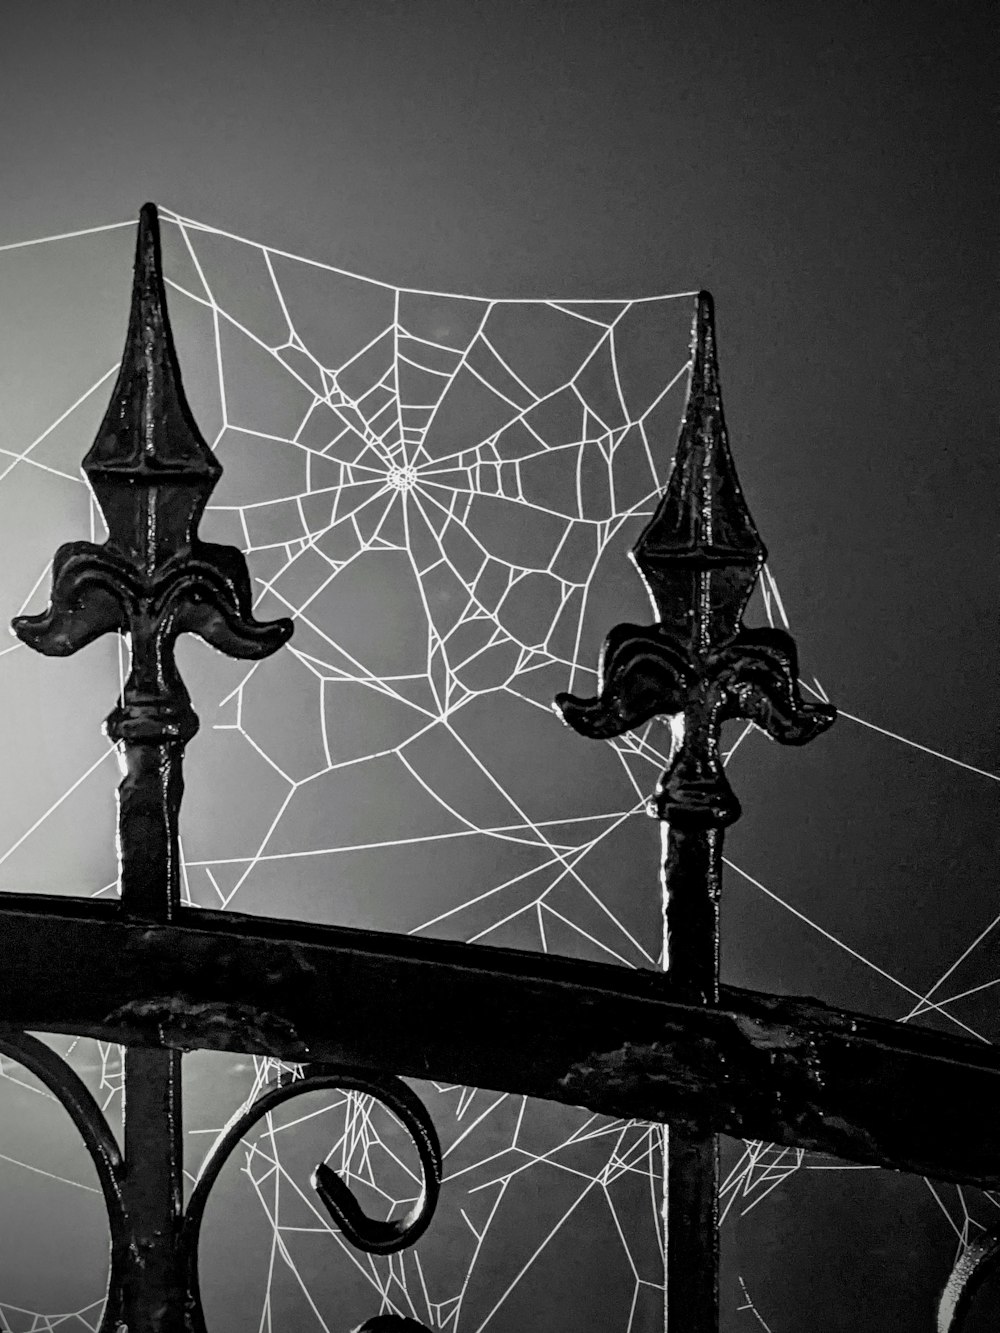 spider web on black metal fence